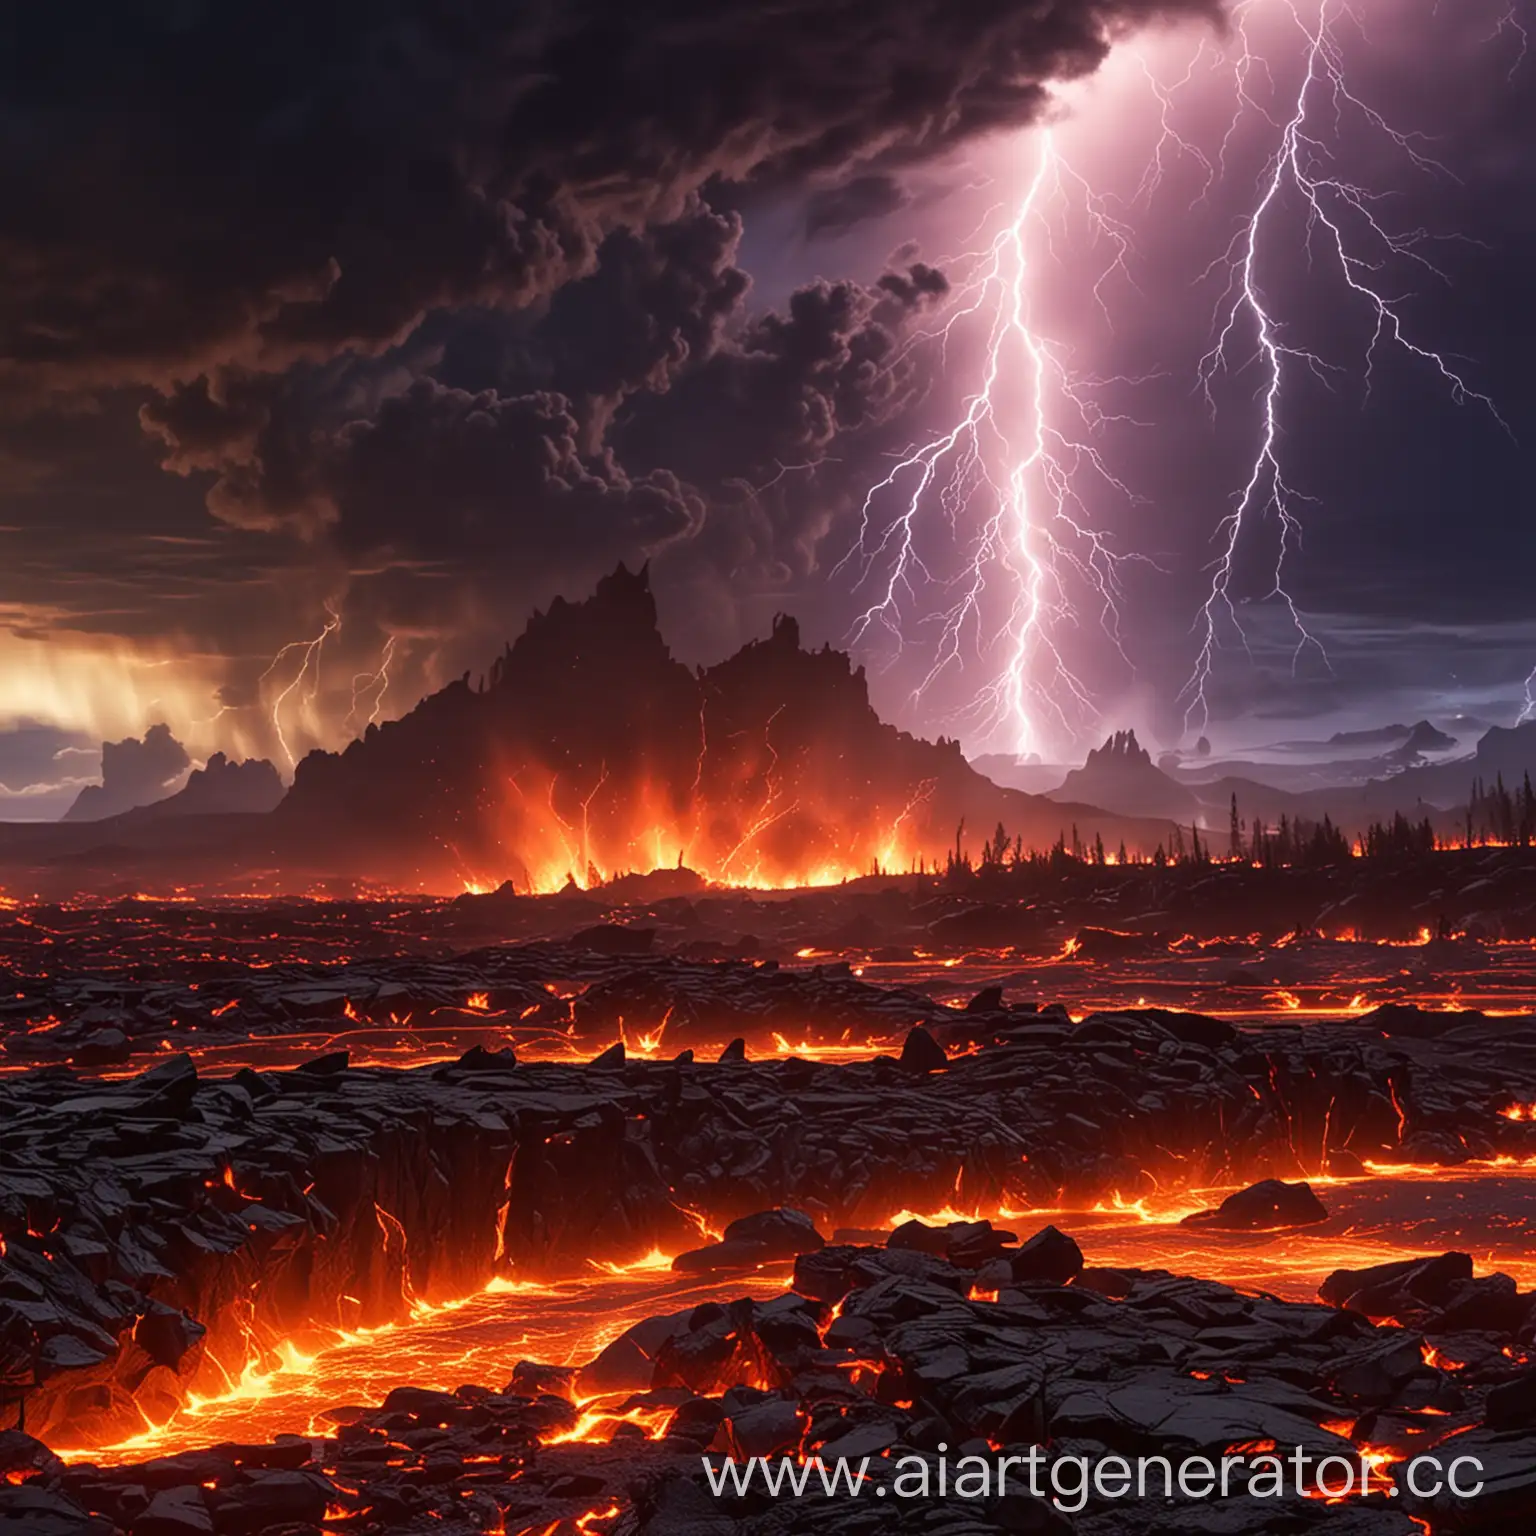 catastrophe, earth shattering, lava, lightning, continents shatter, aurora borealis